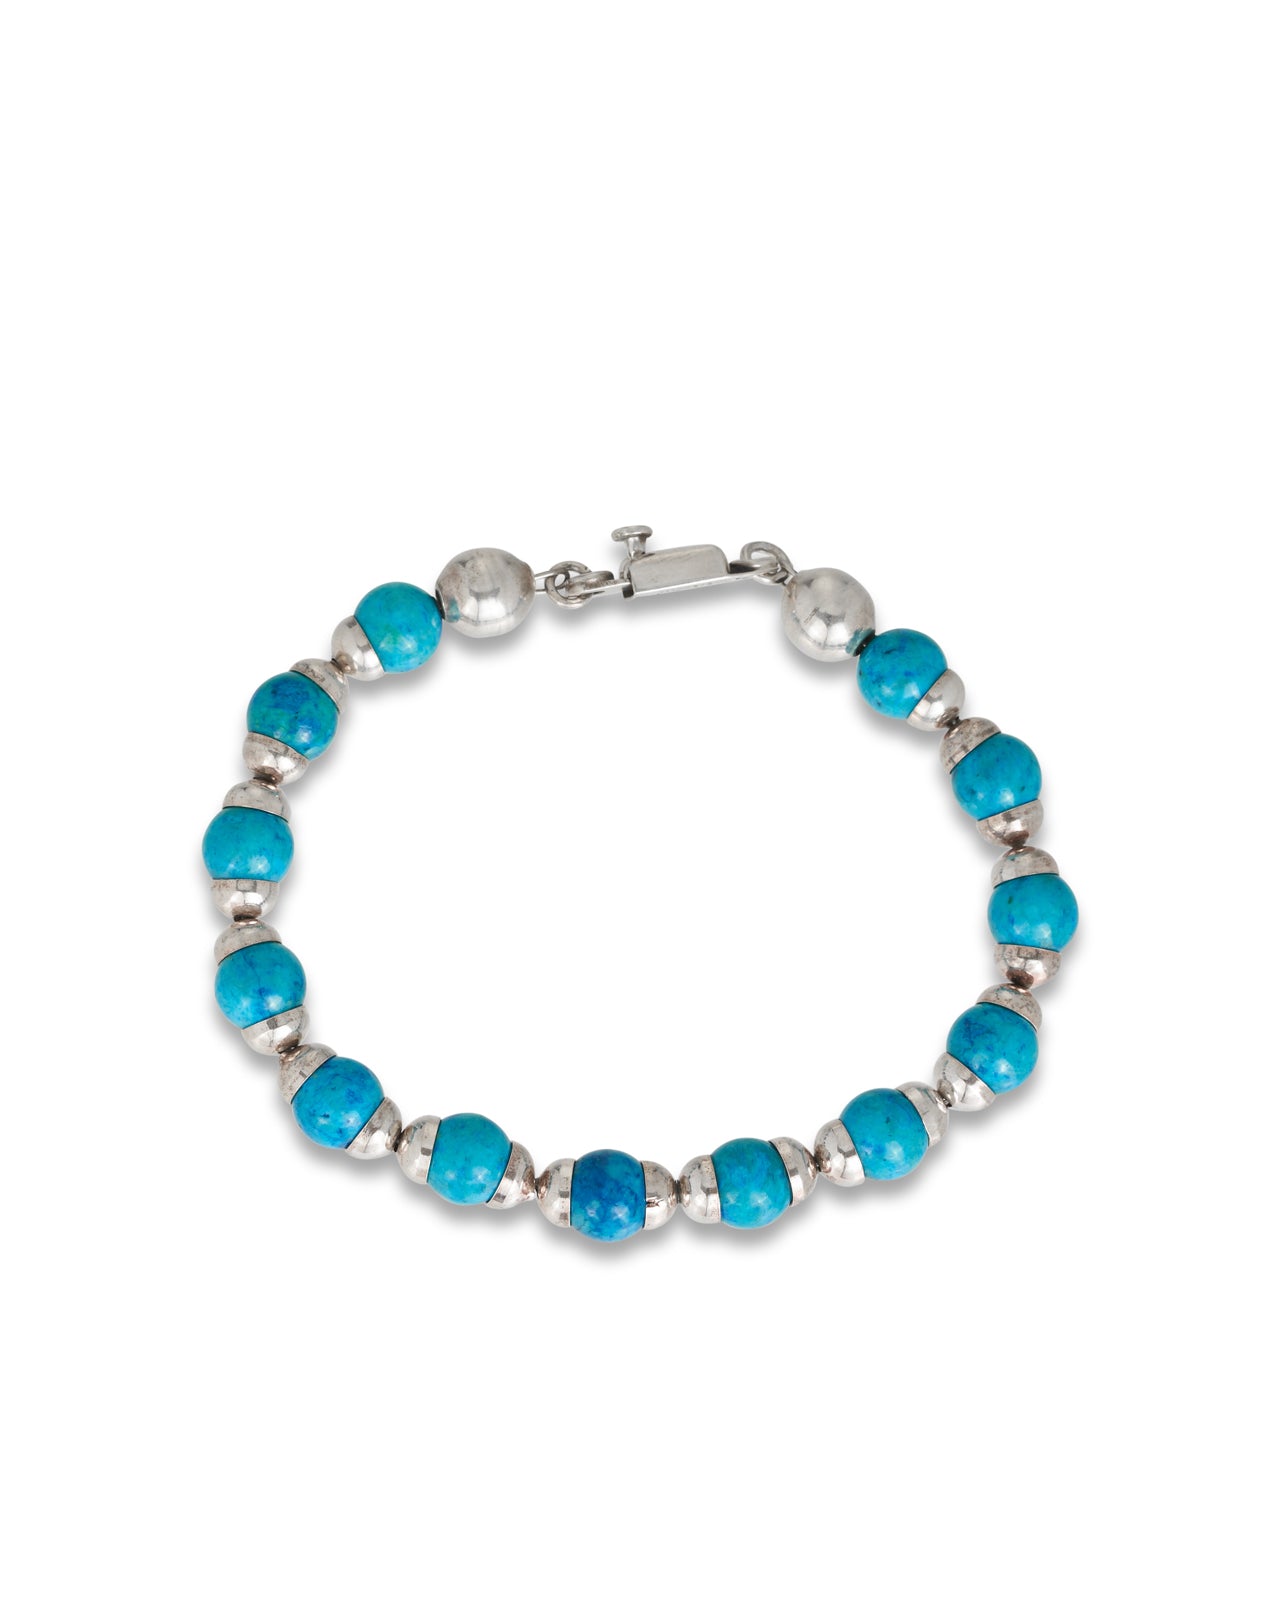 Vintage Mexican silver & blue glass bead bracelet